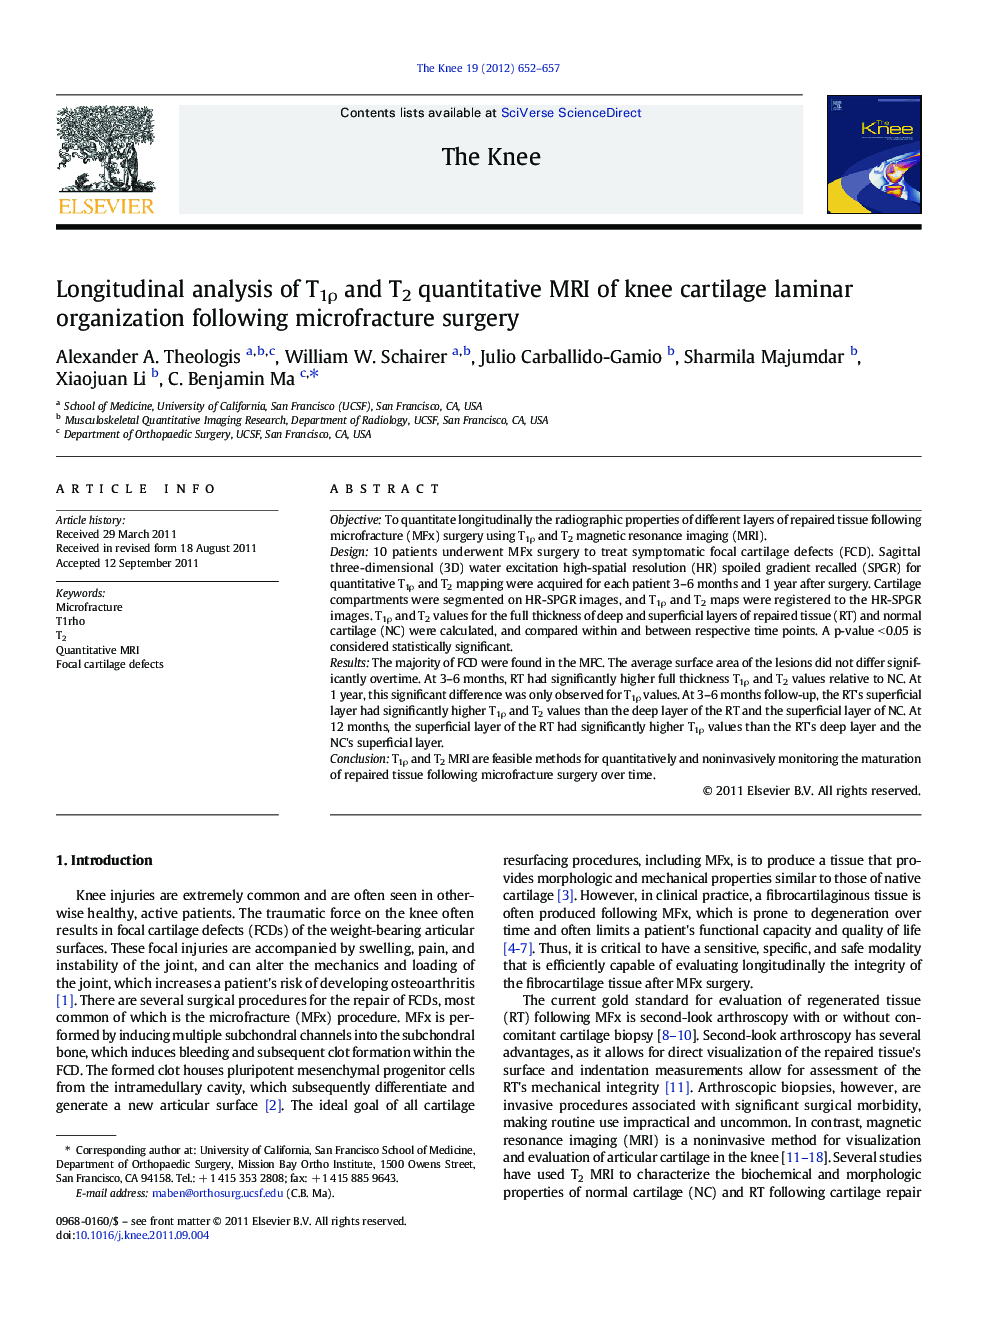 Longitudinal analysis of T1ρ and T2 quantitative MRI of knee cartilage laminar organization following microfracture surgery